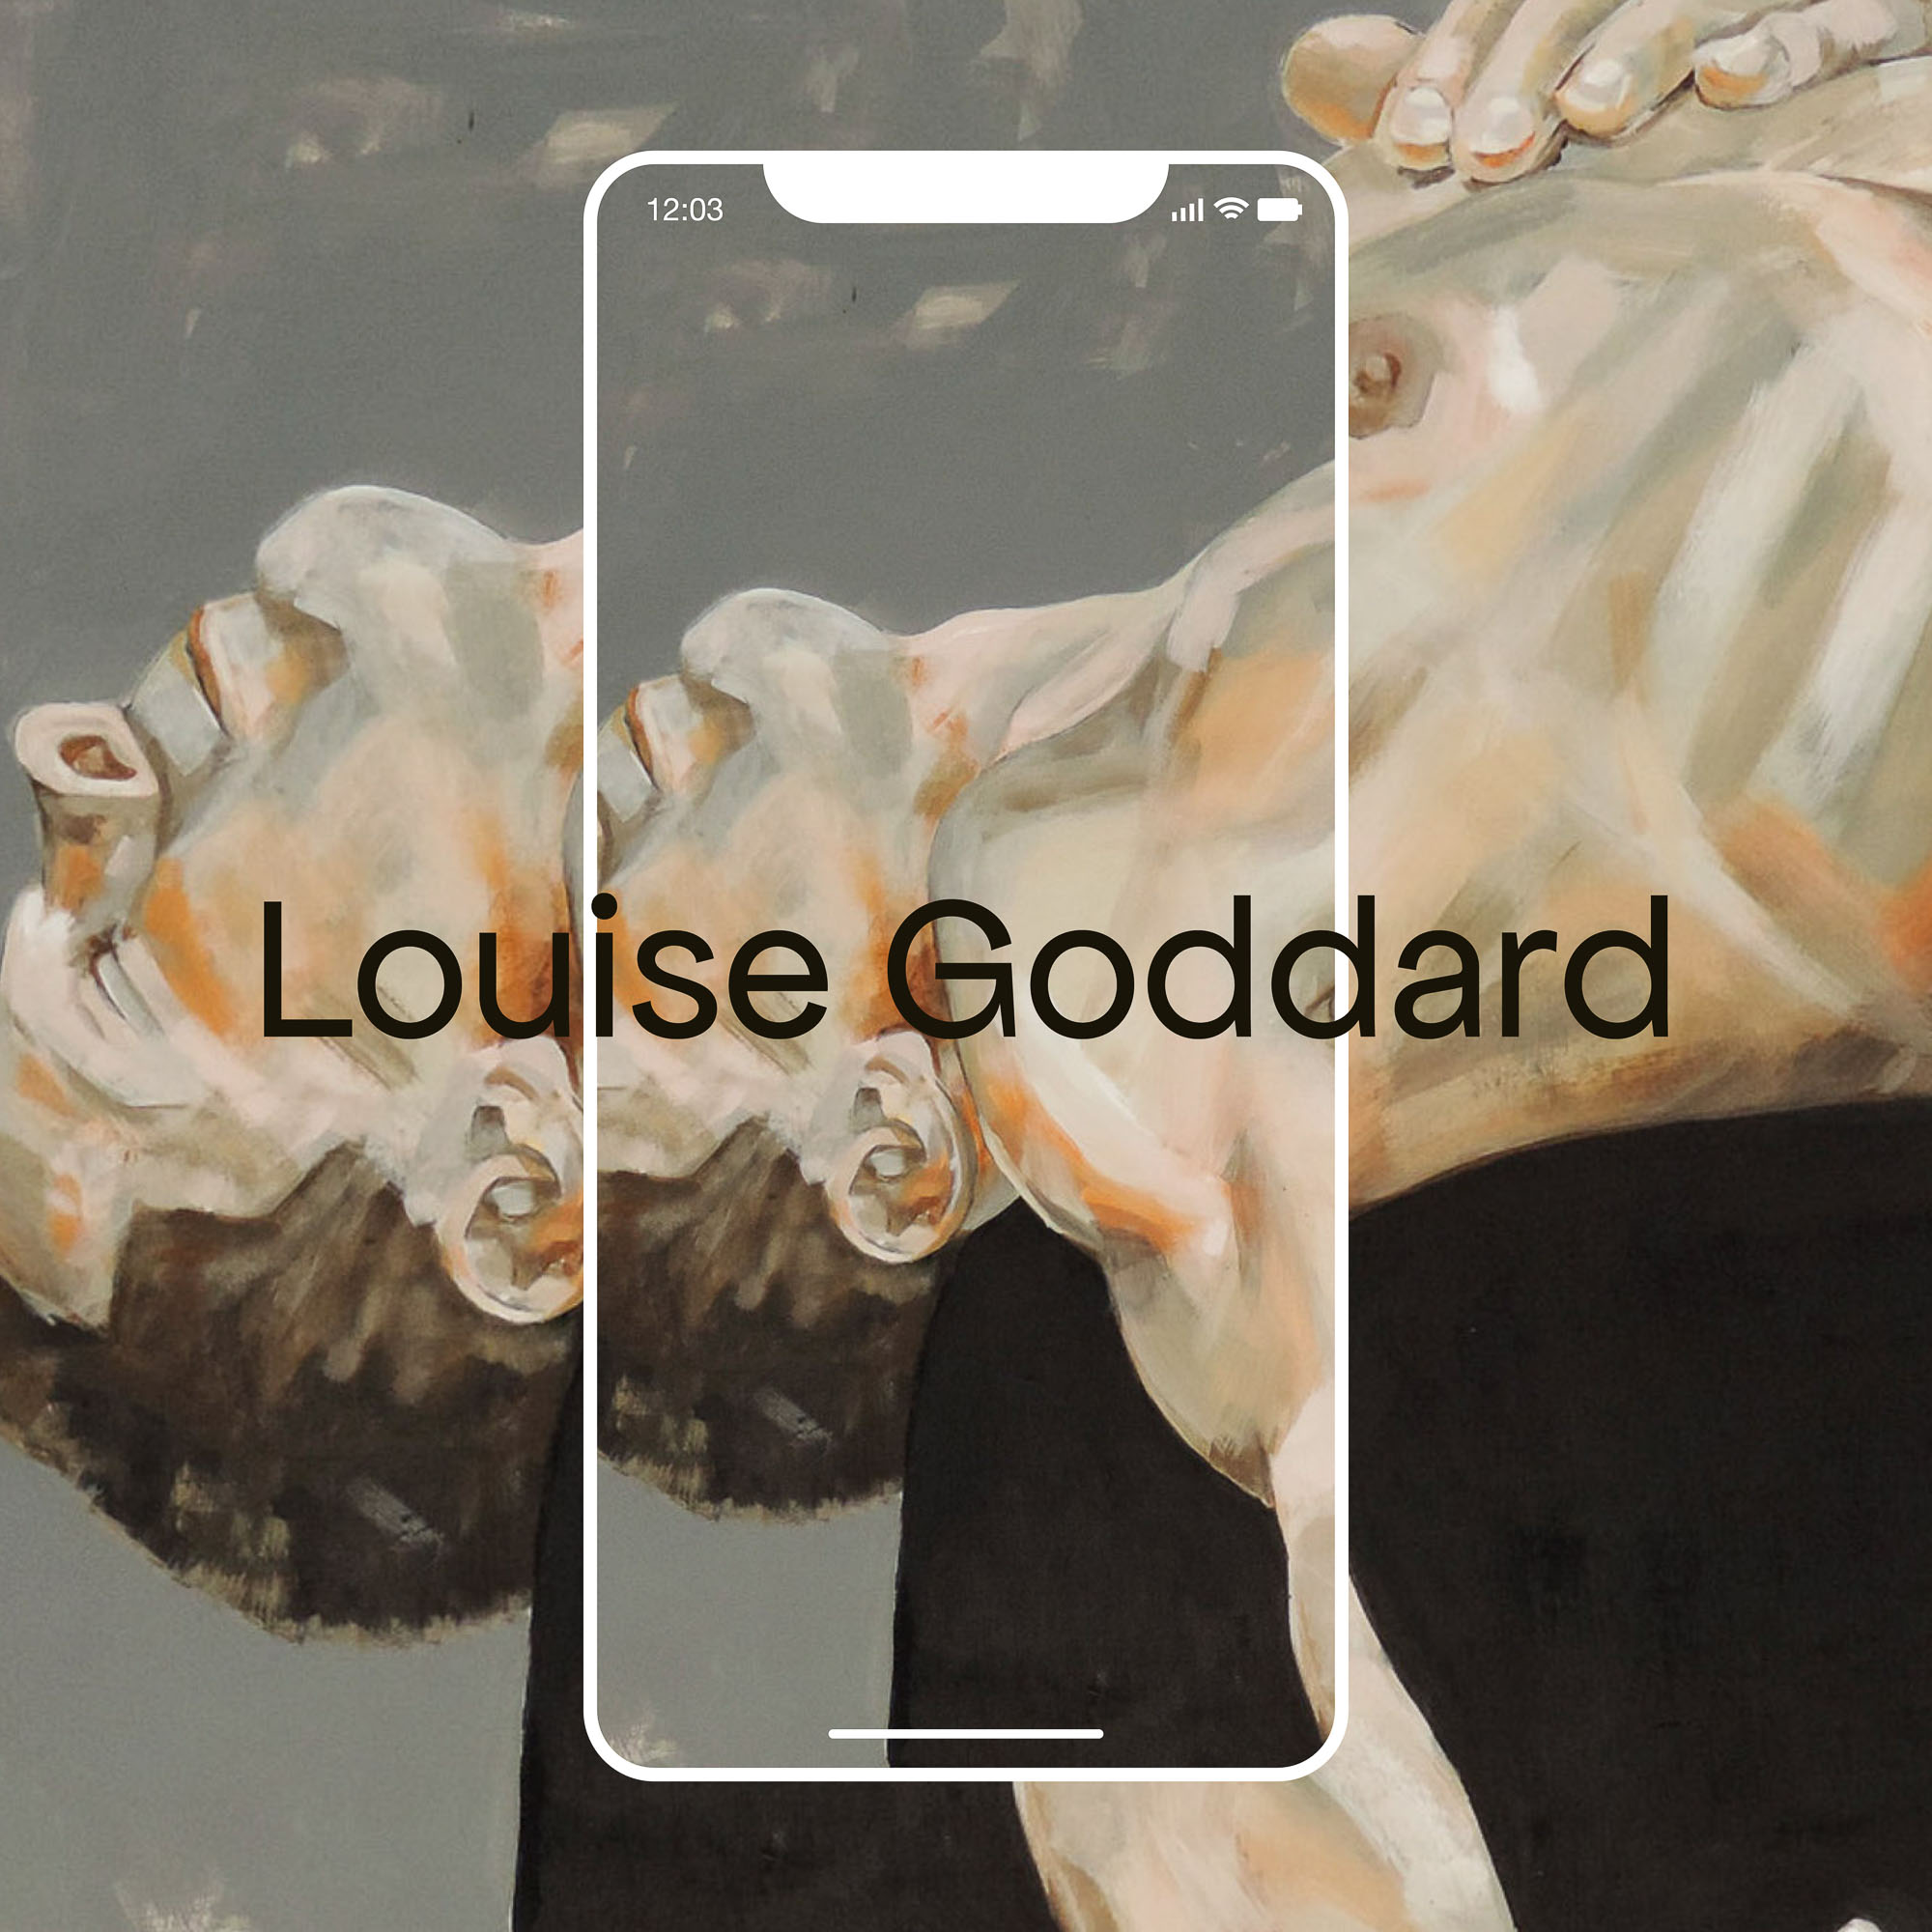 Louise Goddard